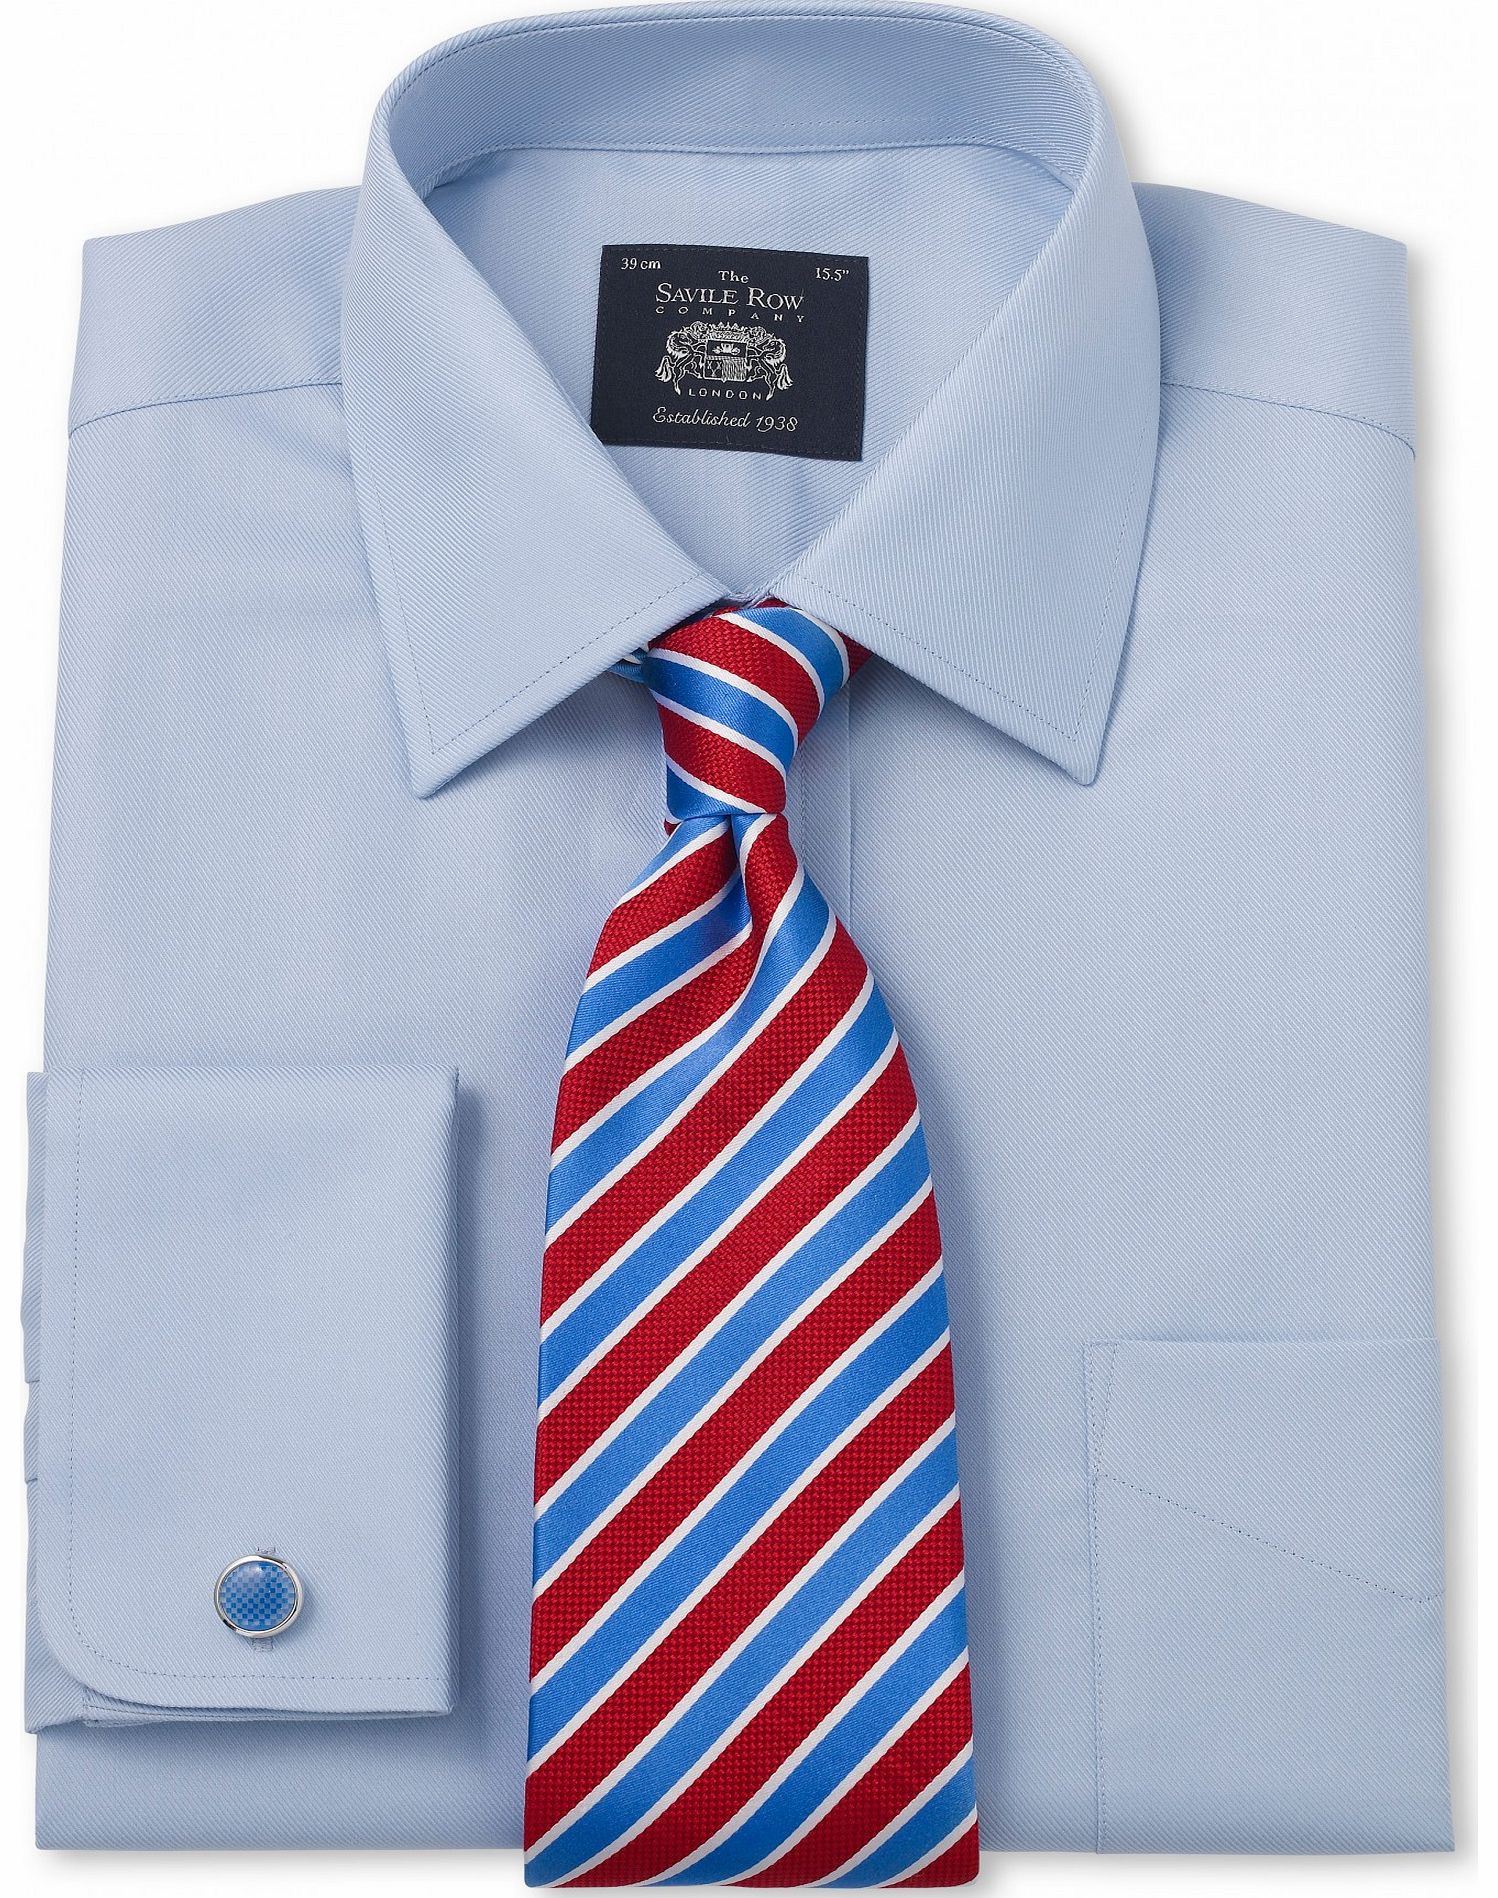 Savile Row Company Light Blue Twill Classic Fit Shirt 19`` Standard